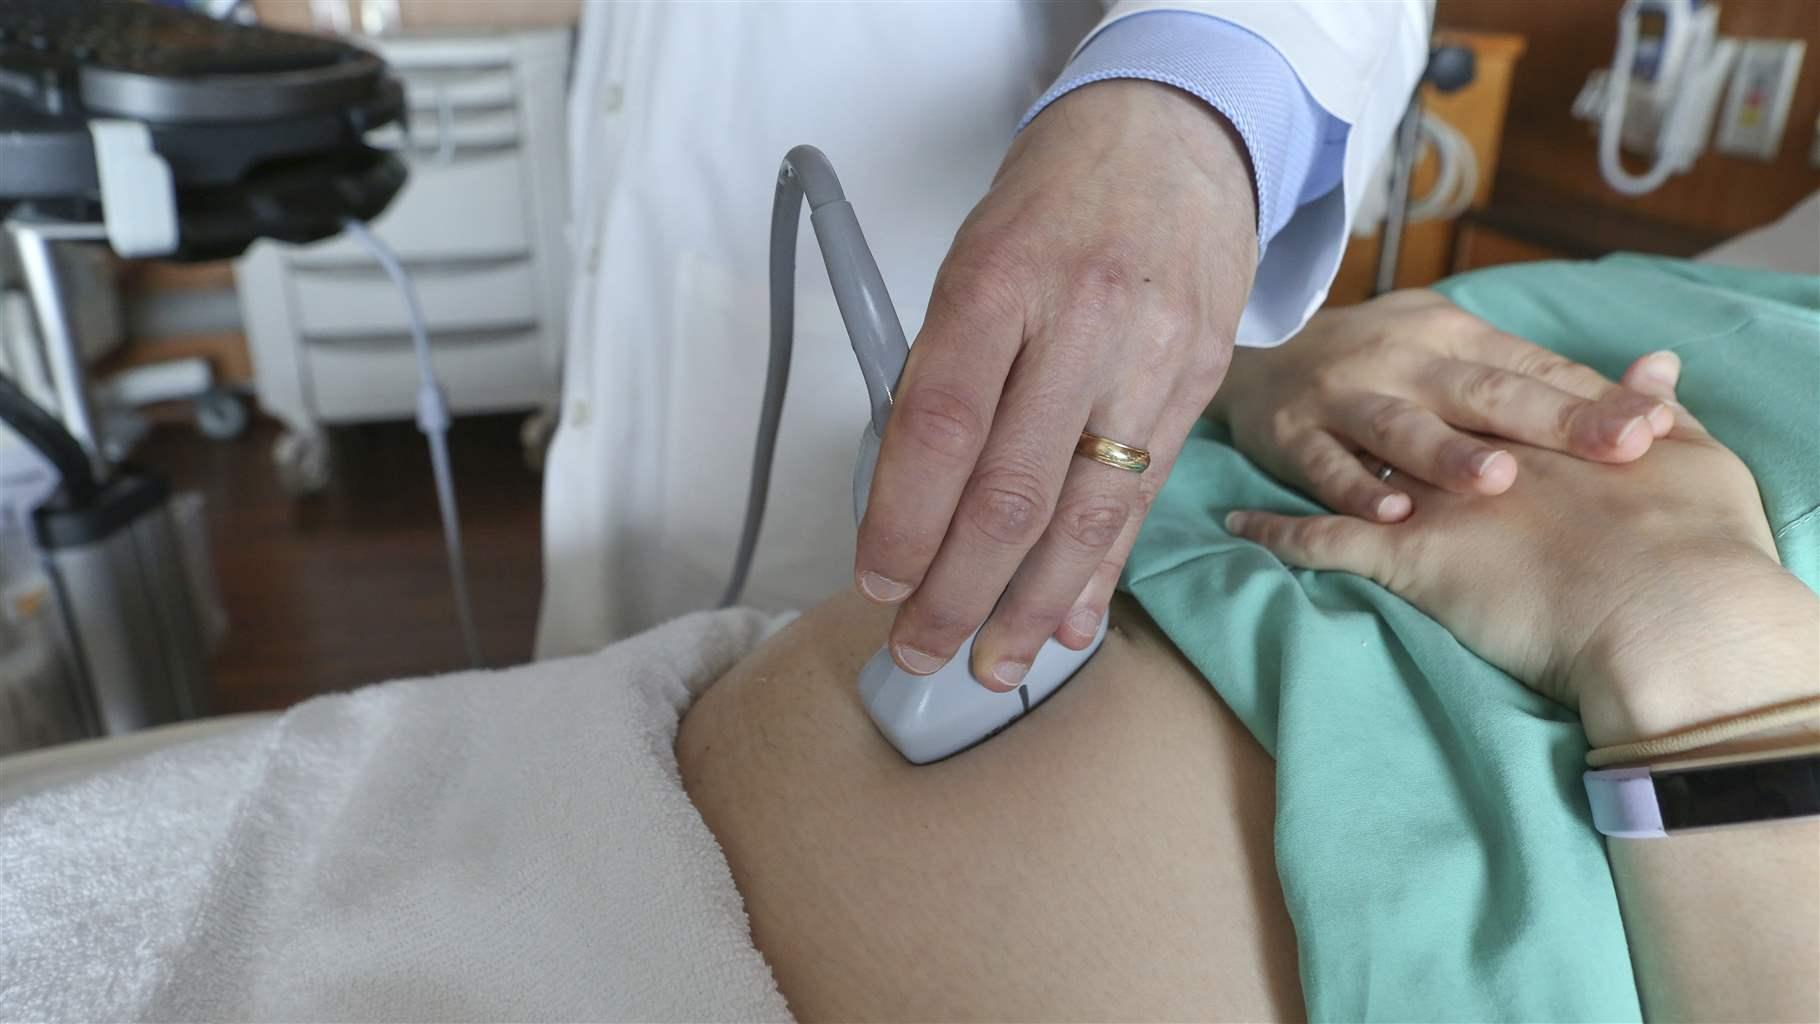 Critics Fear Abortion Bans Could Jeopardize Health of Pregnant Women